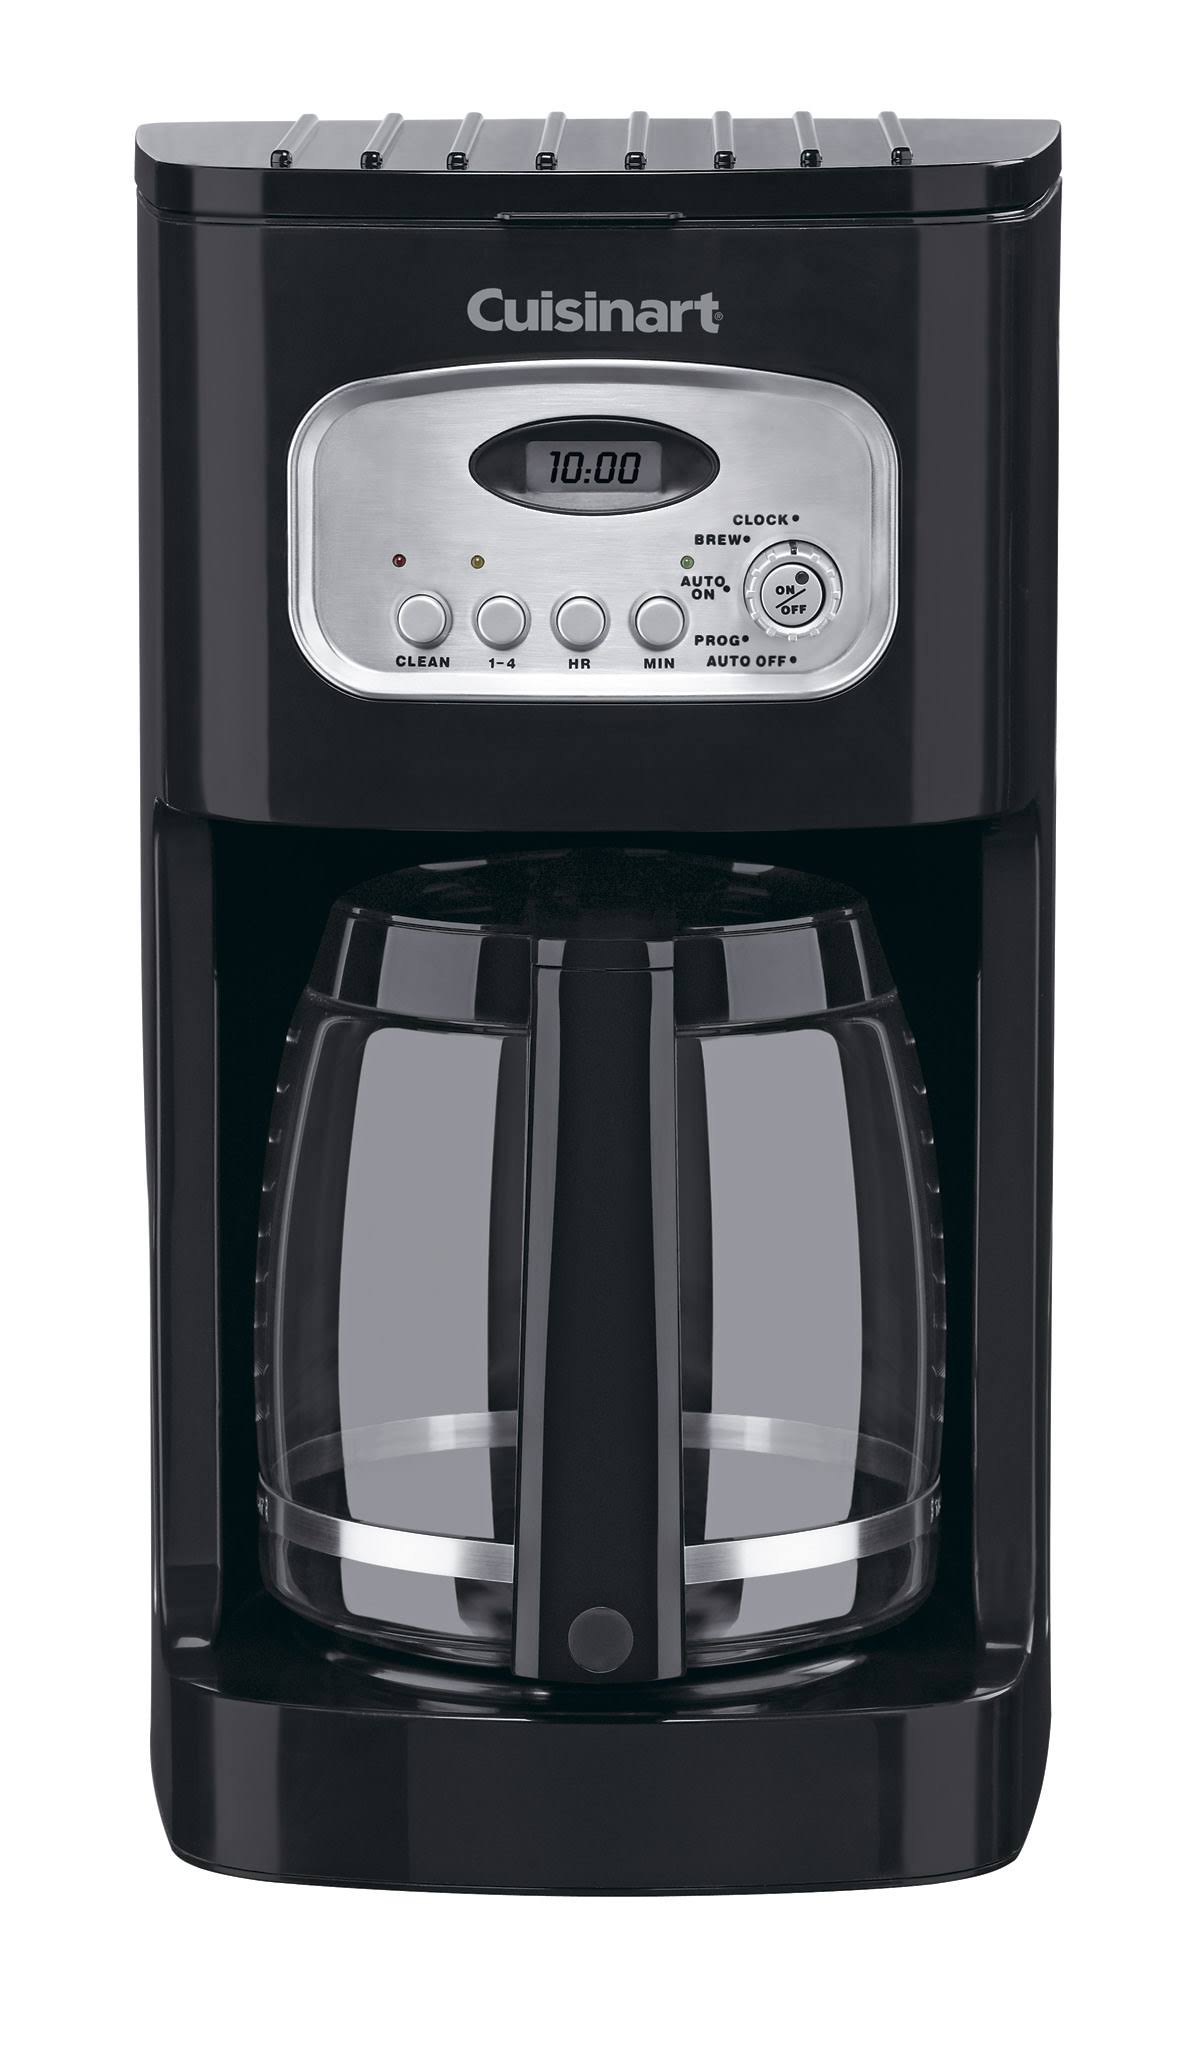 Cuisinart 12 Cup Programmable Coffee Maker - Black